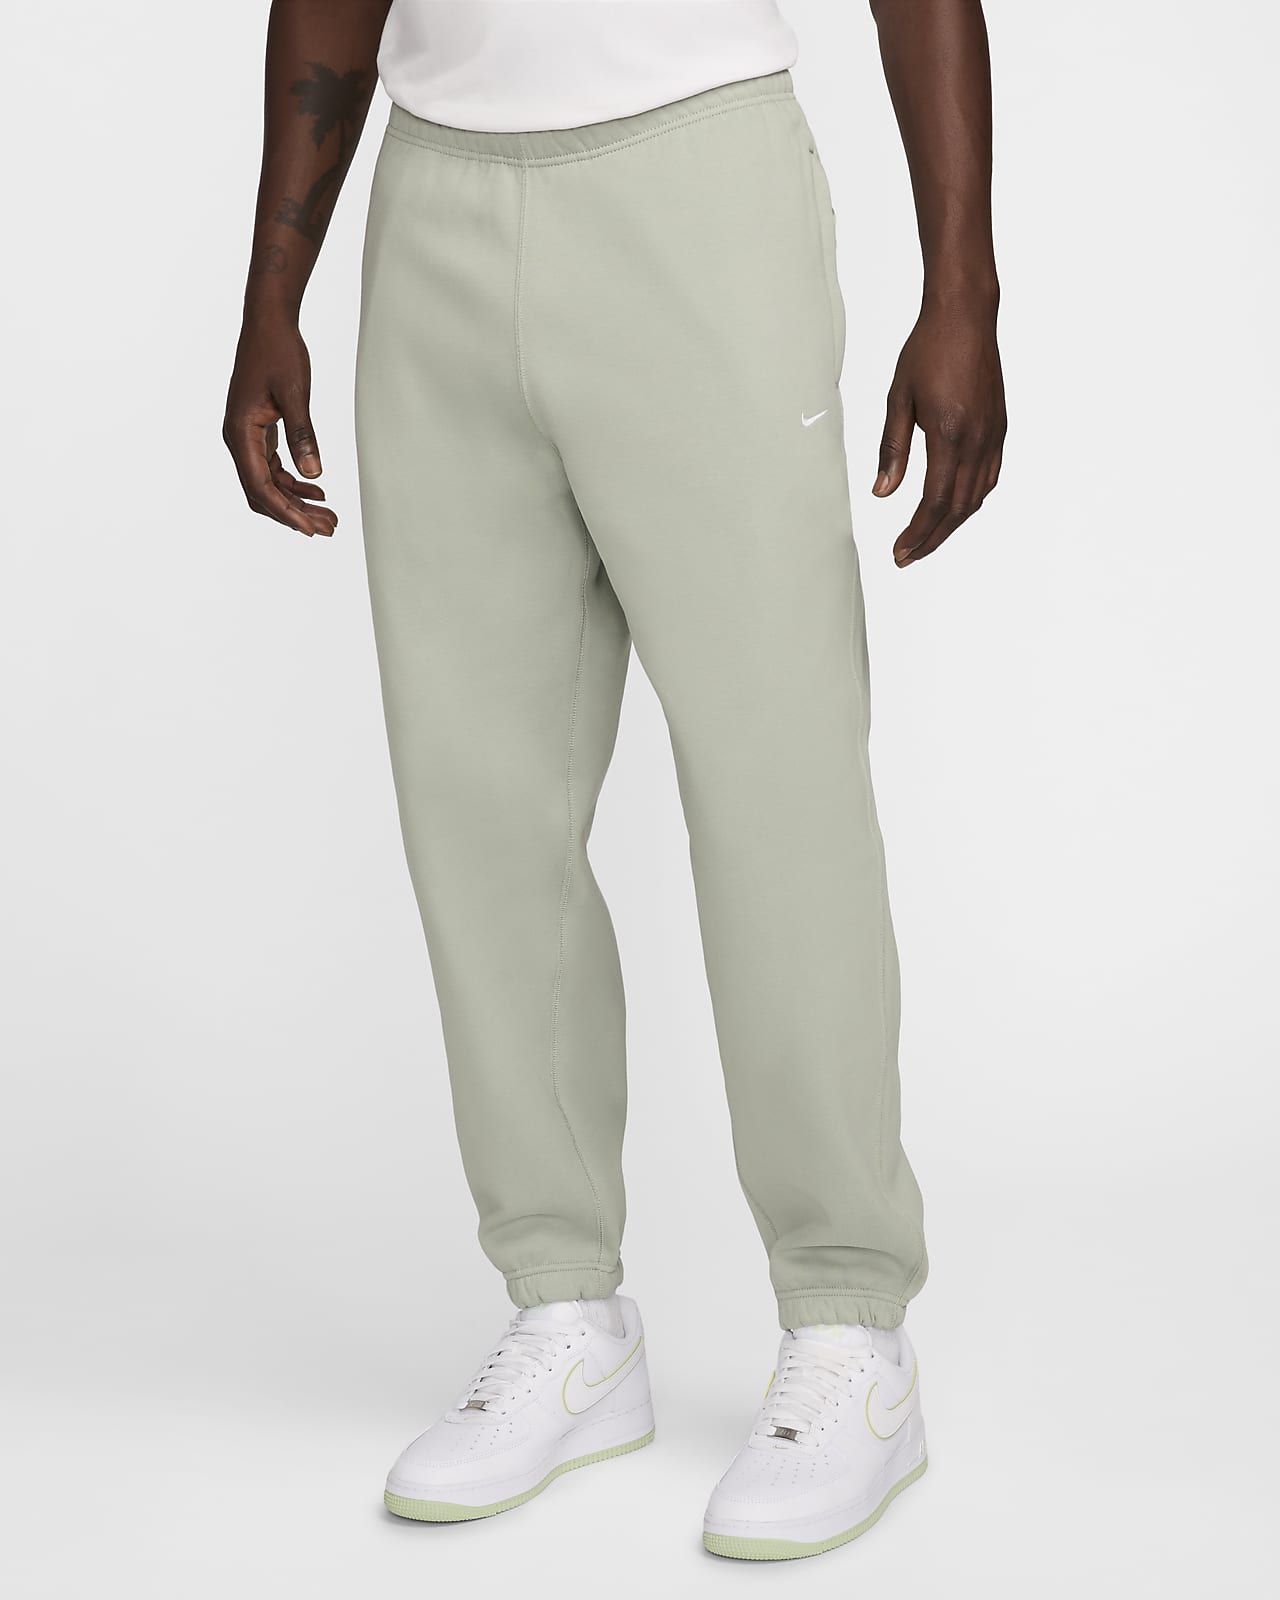 Pantalon en tissu Fleece Nike Solo Swoosh pour Homme